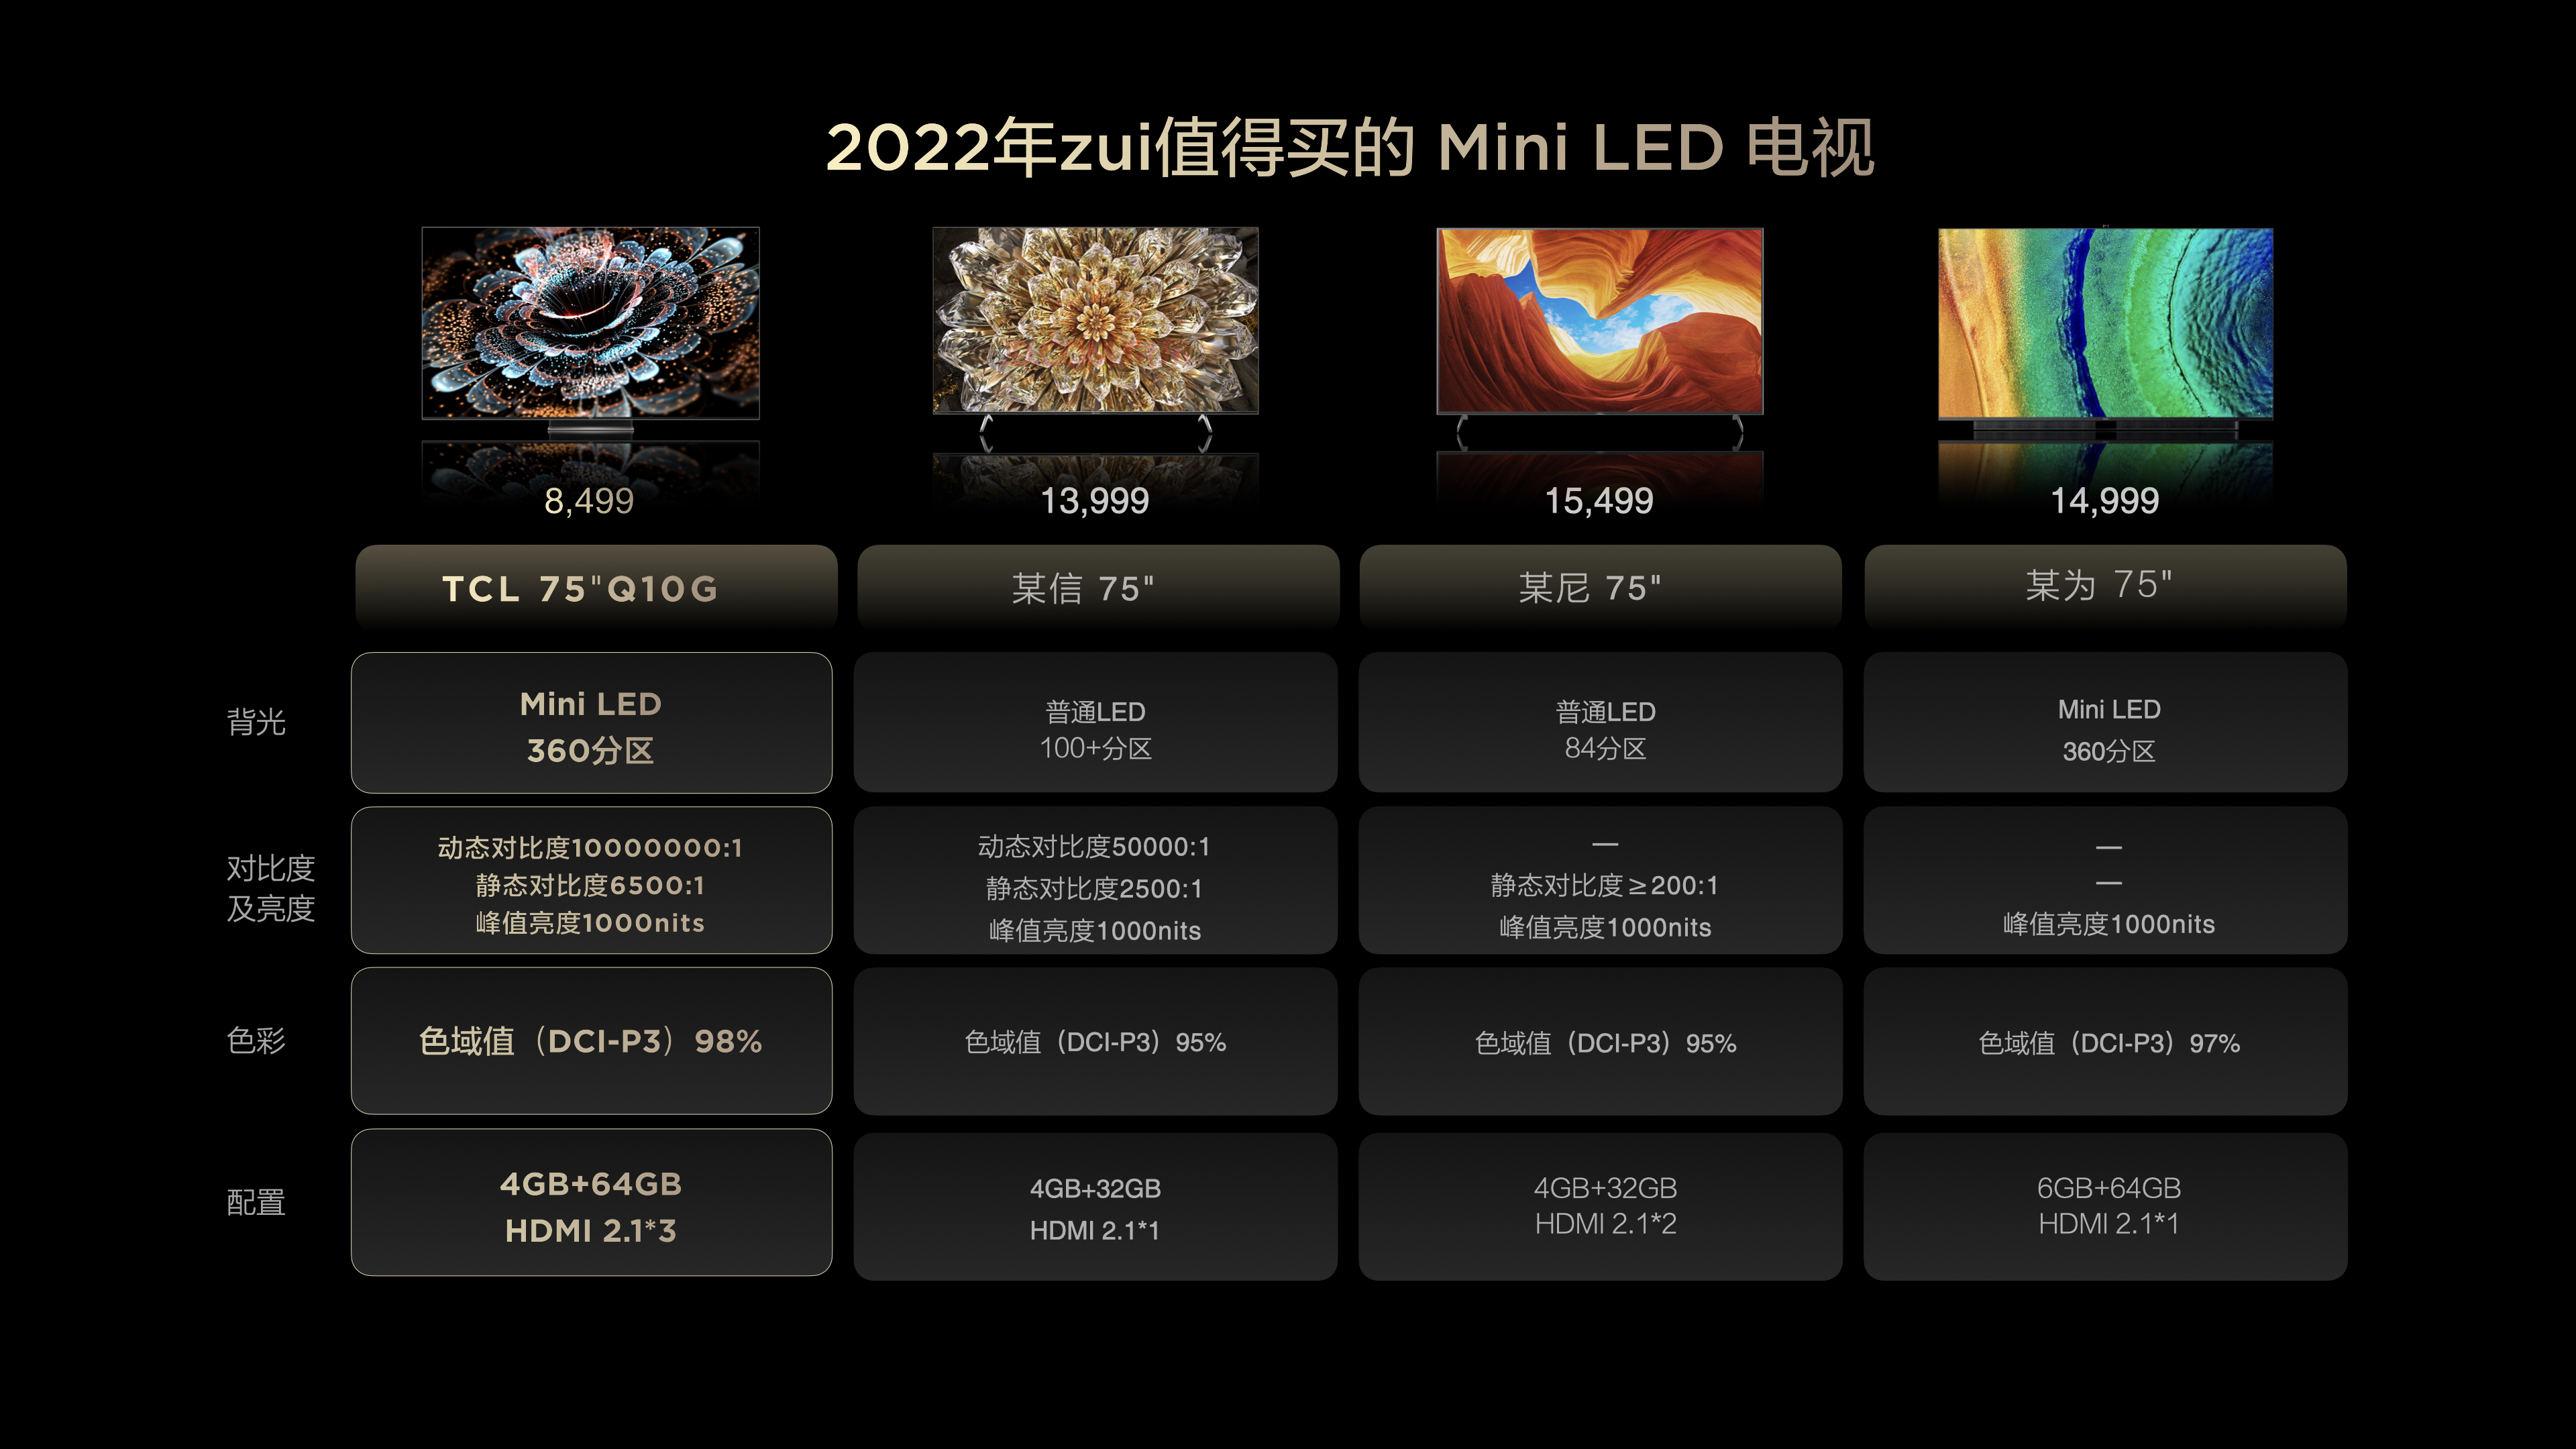 TCL发布2022年最值得购买的电视Q10G，Mini LED画质价格双王炸